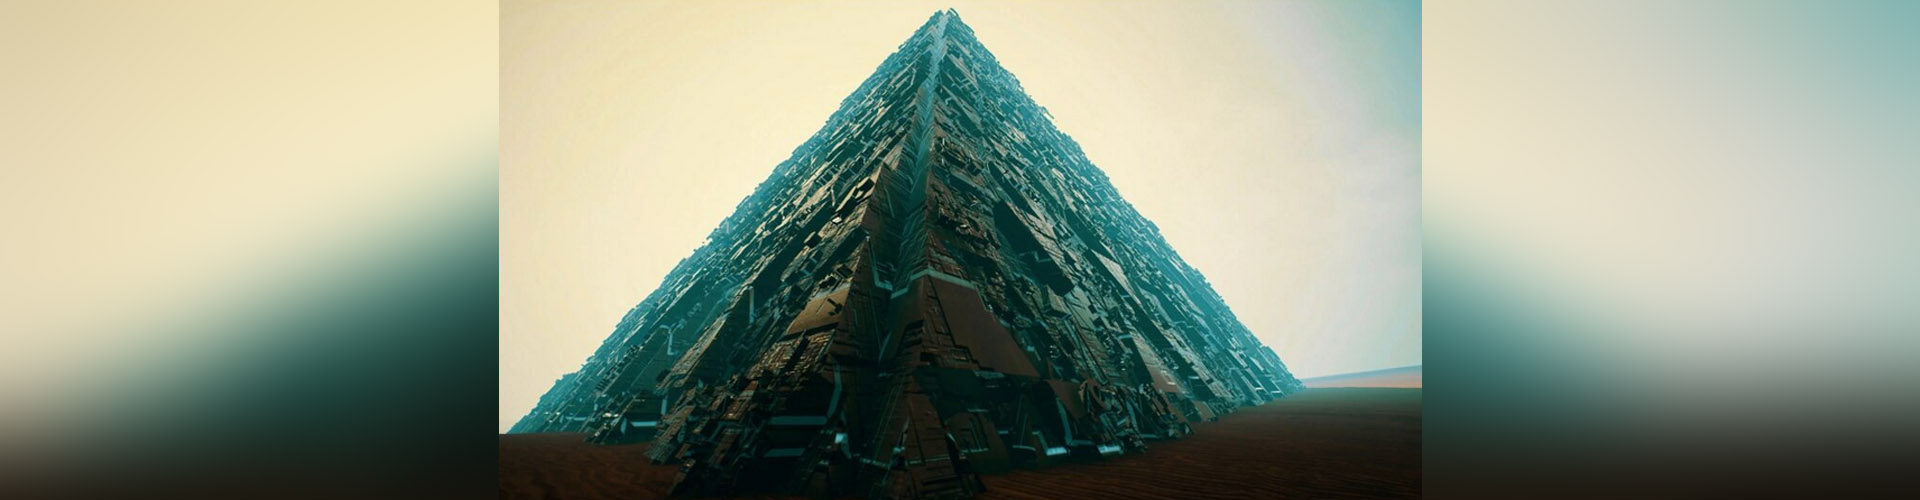 (VIDEO) Misteriosa Pirámide en China: ¿Una antigua base extraterrestre?